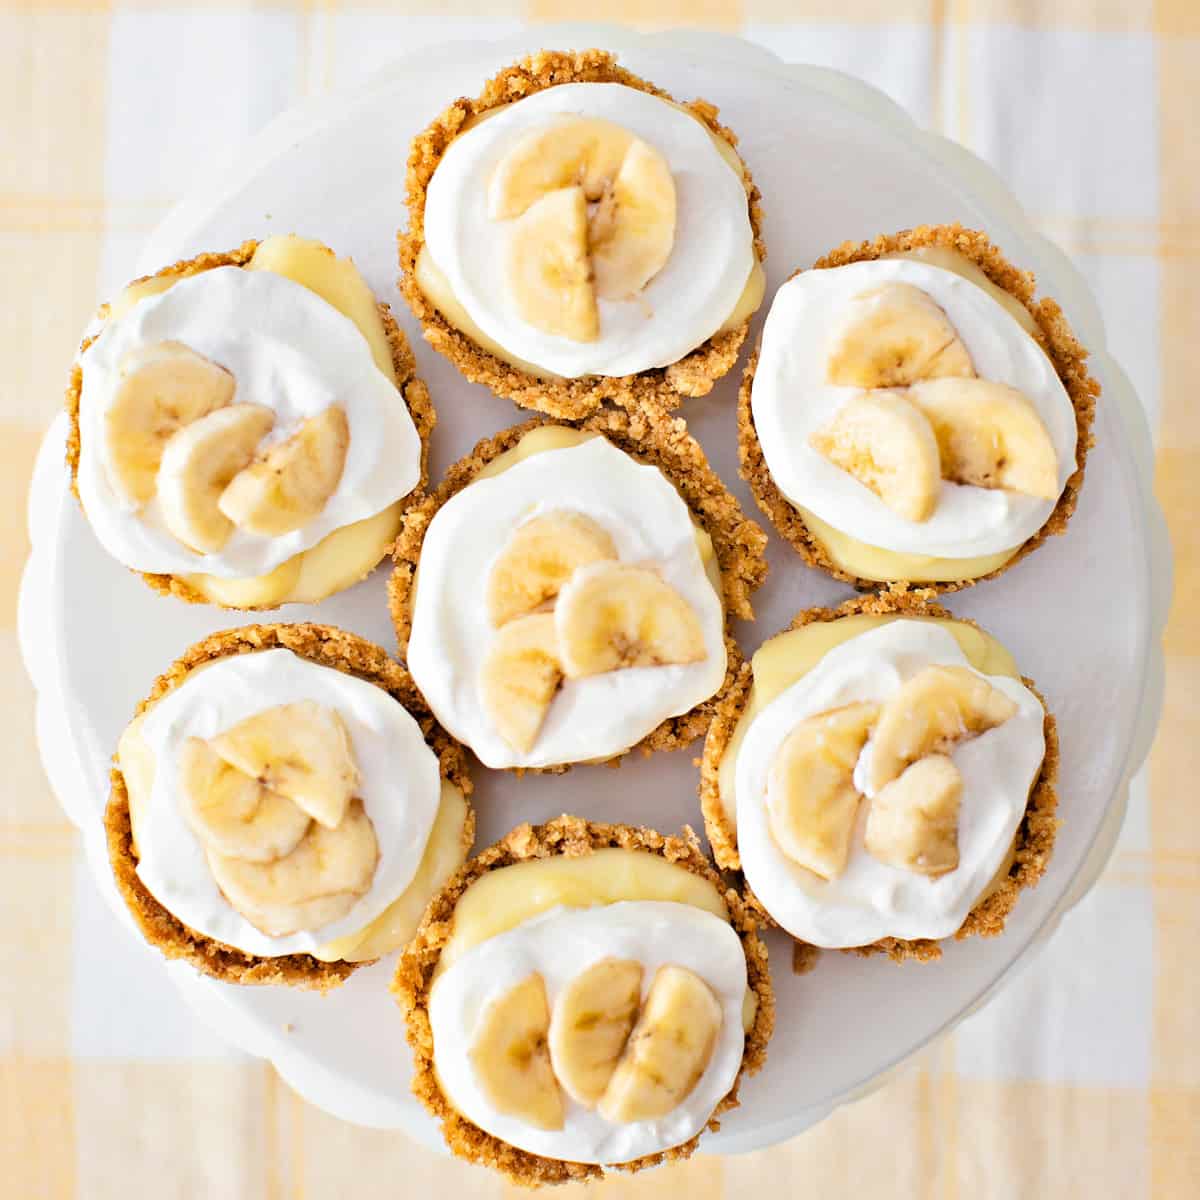 https://helloyummy.co/wp-content/uploads/2020/07/Mini-Banana-Cream-Pies1.jpg